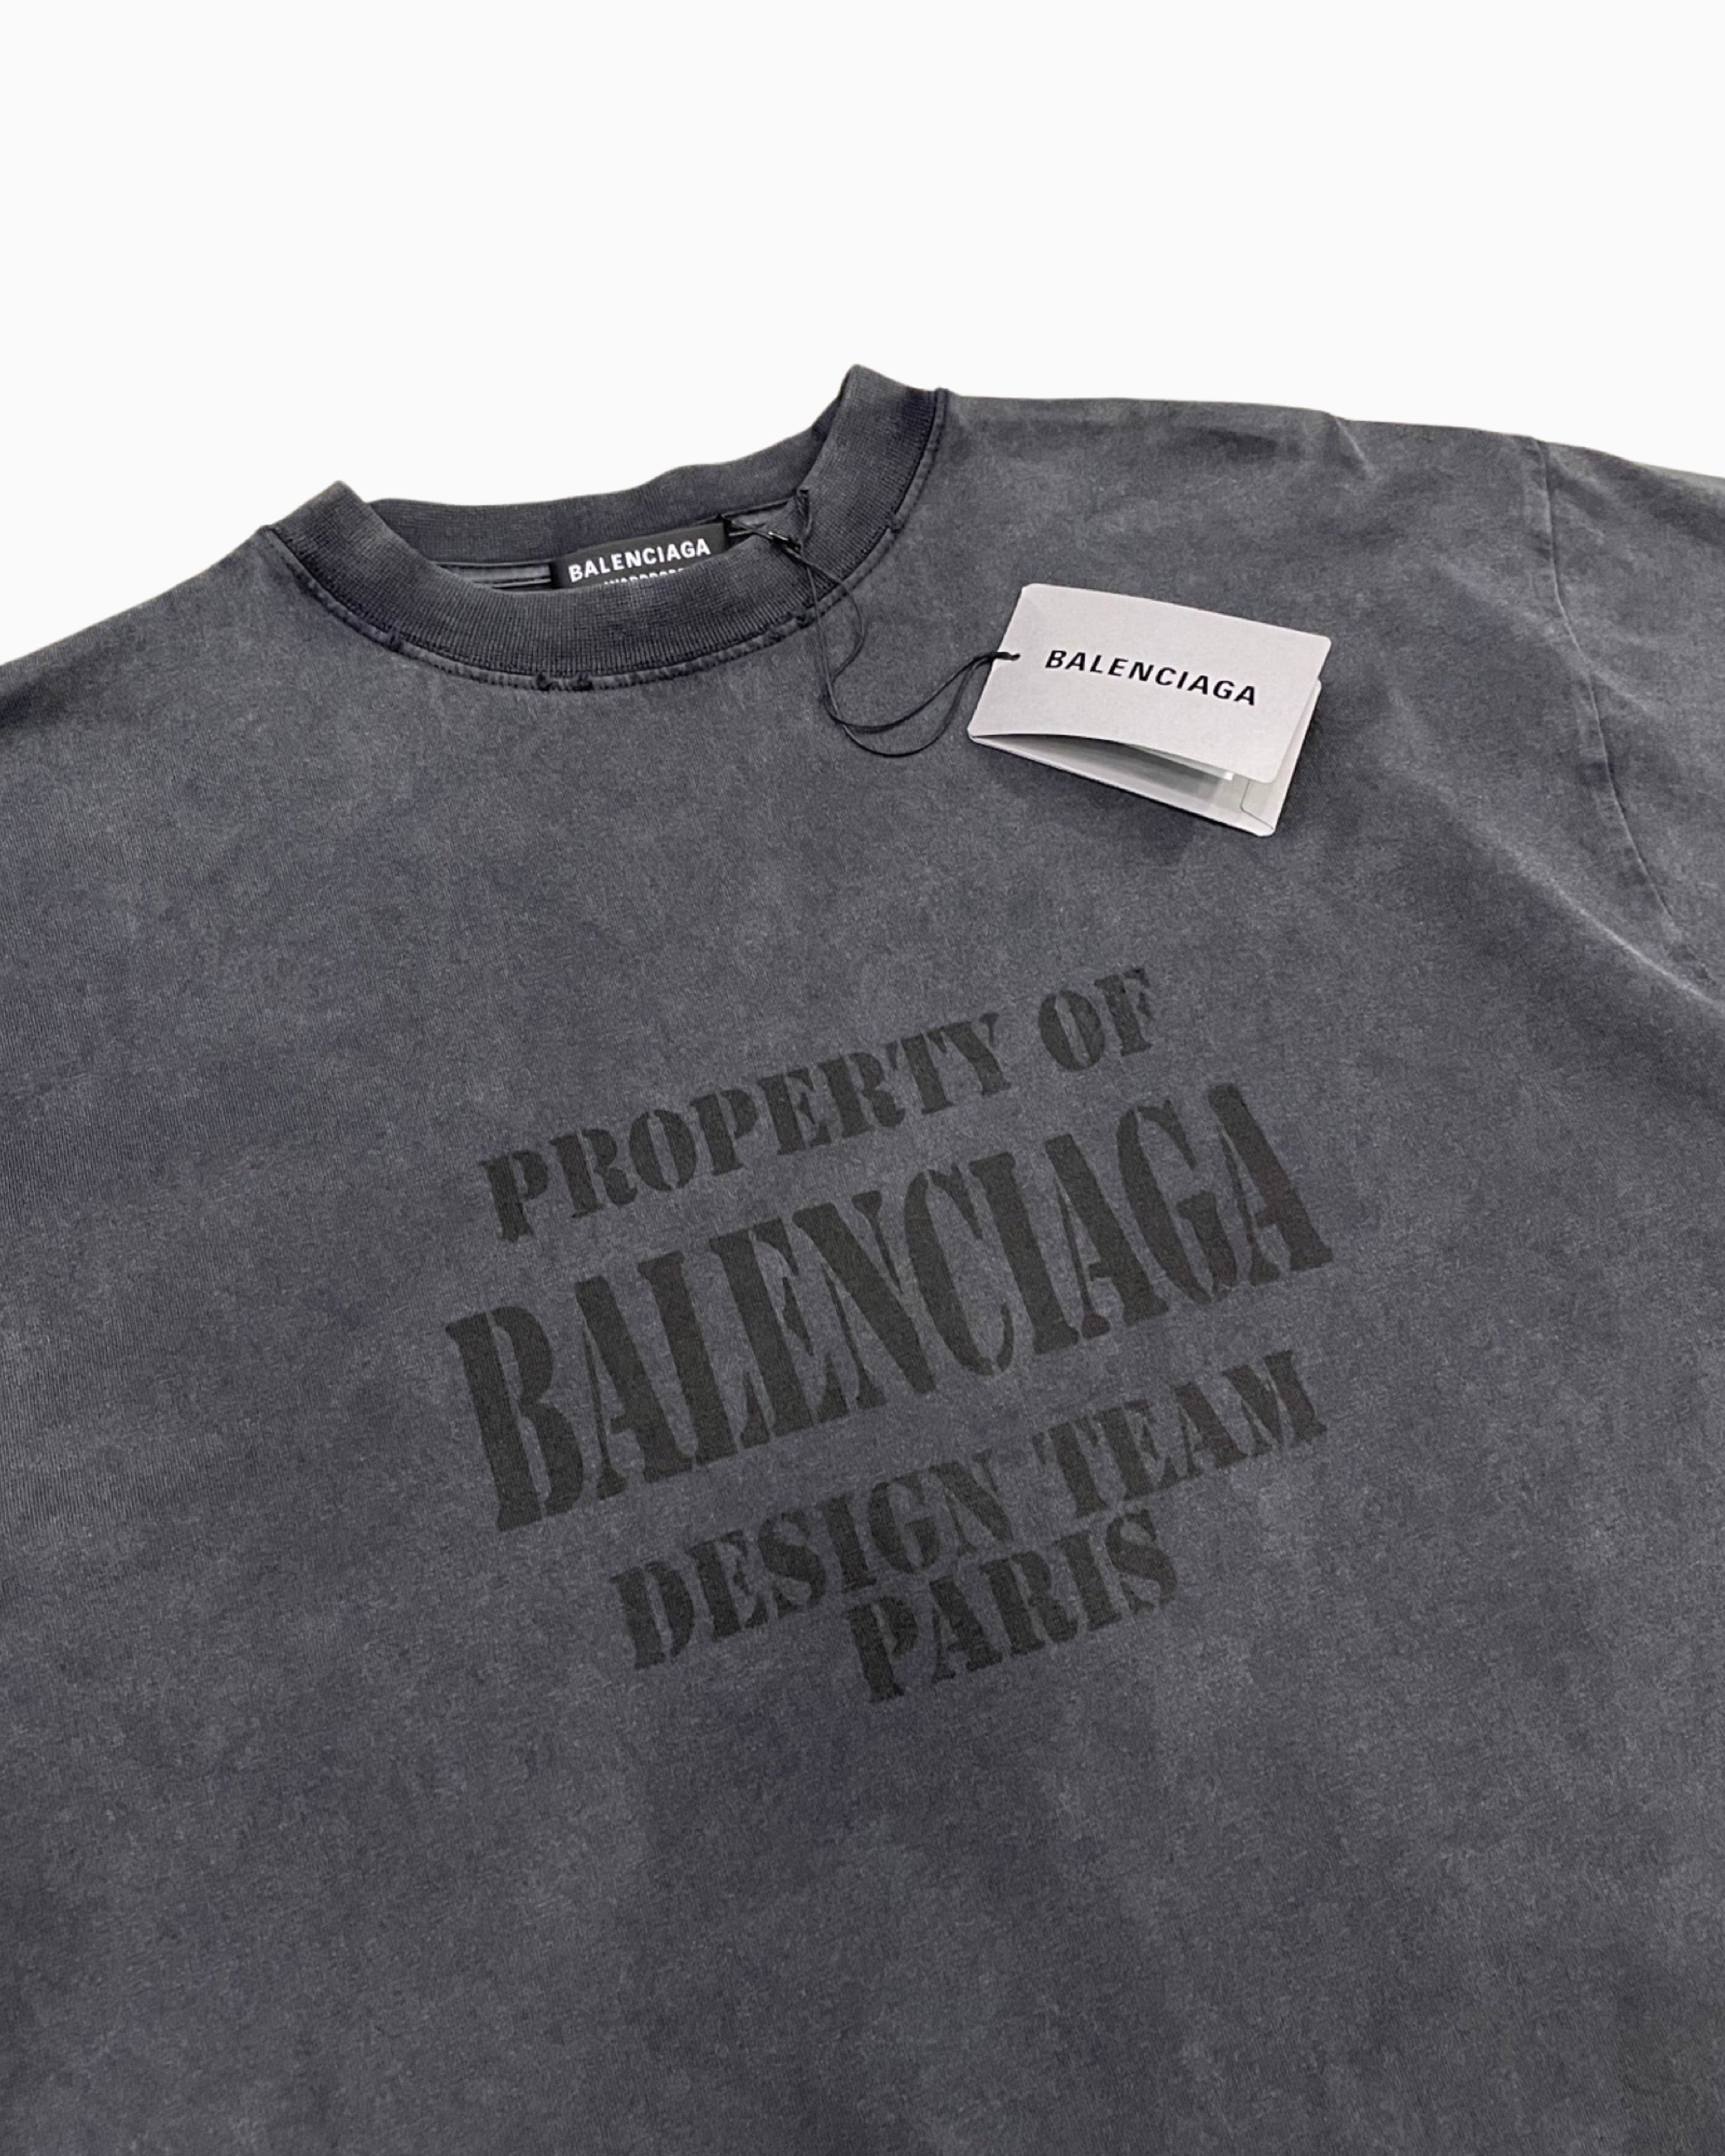 betaling Raak verstrikt binnenkort Balenciaga Property Of T-shirt – FUTURO